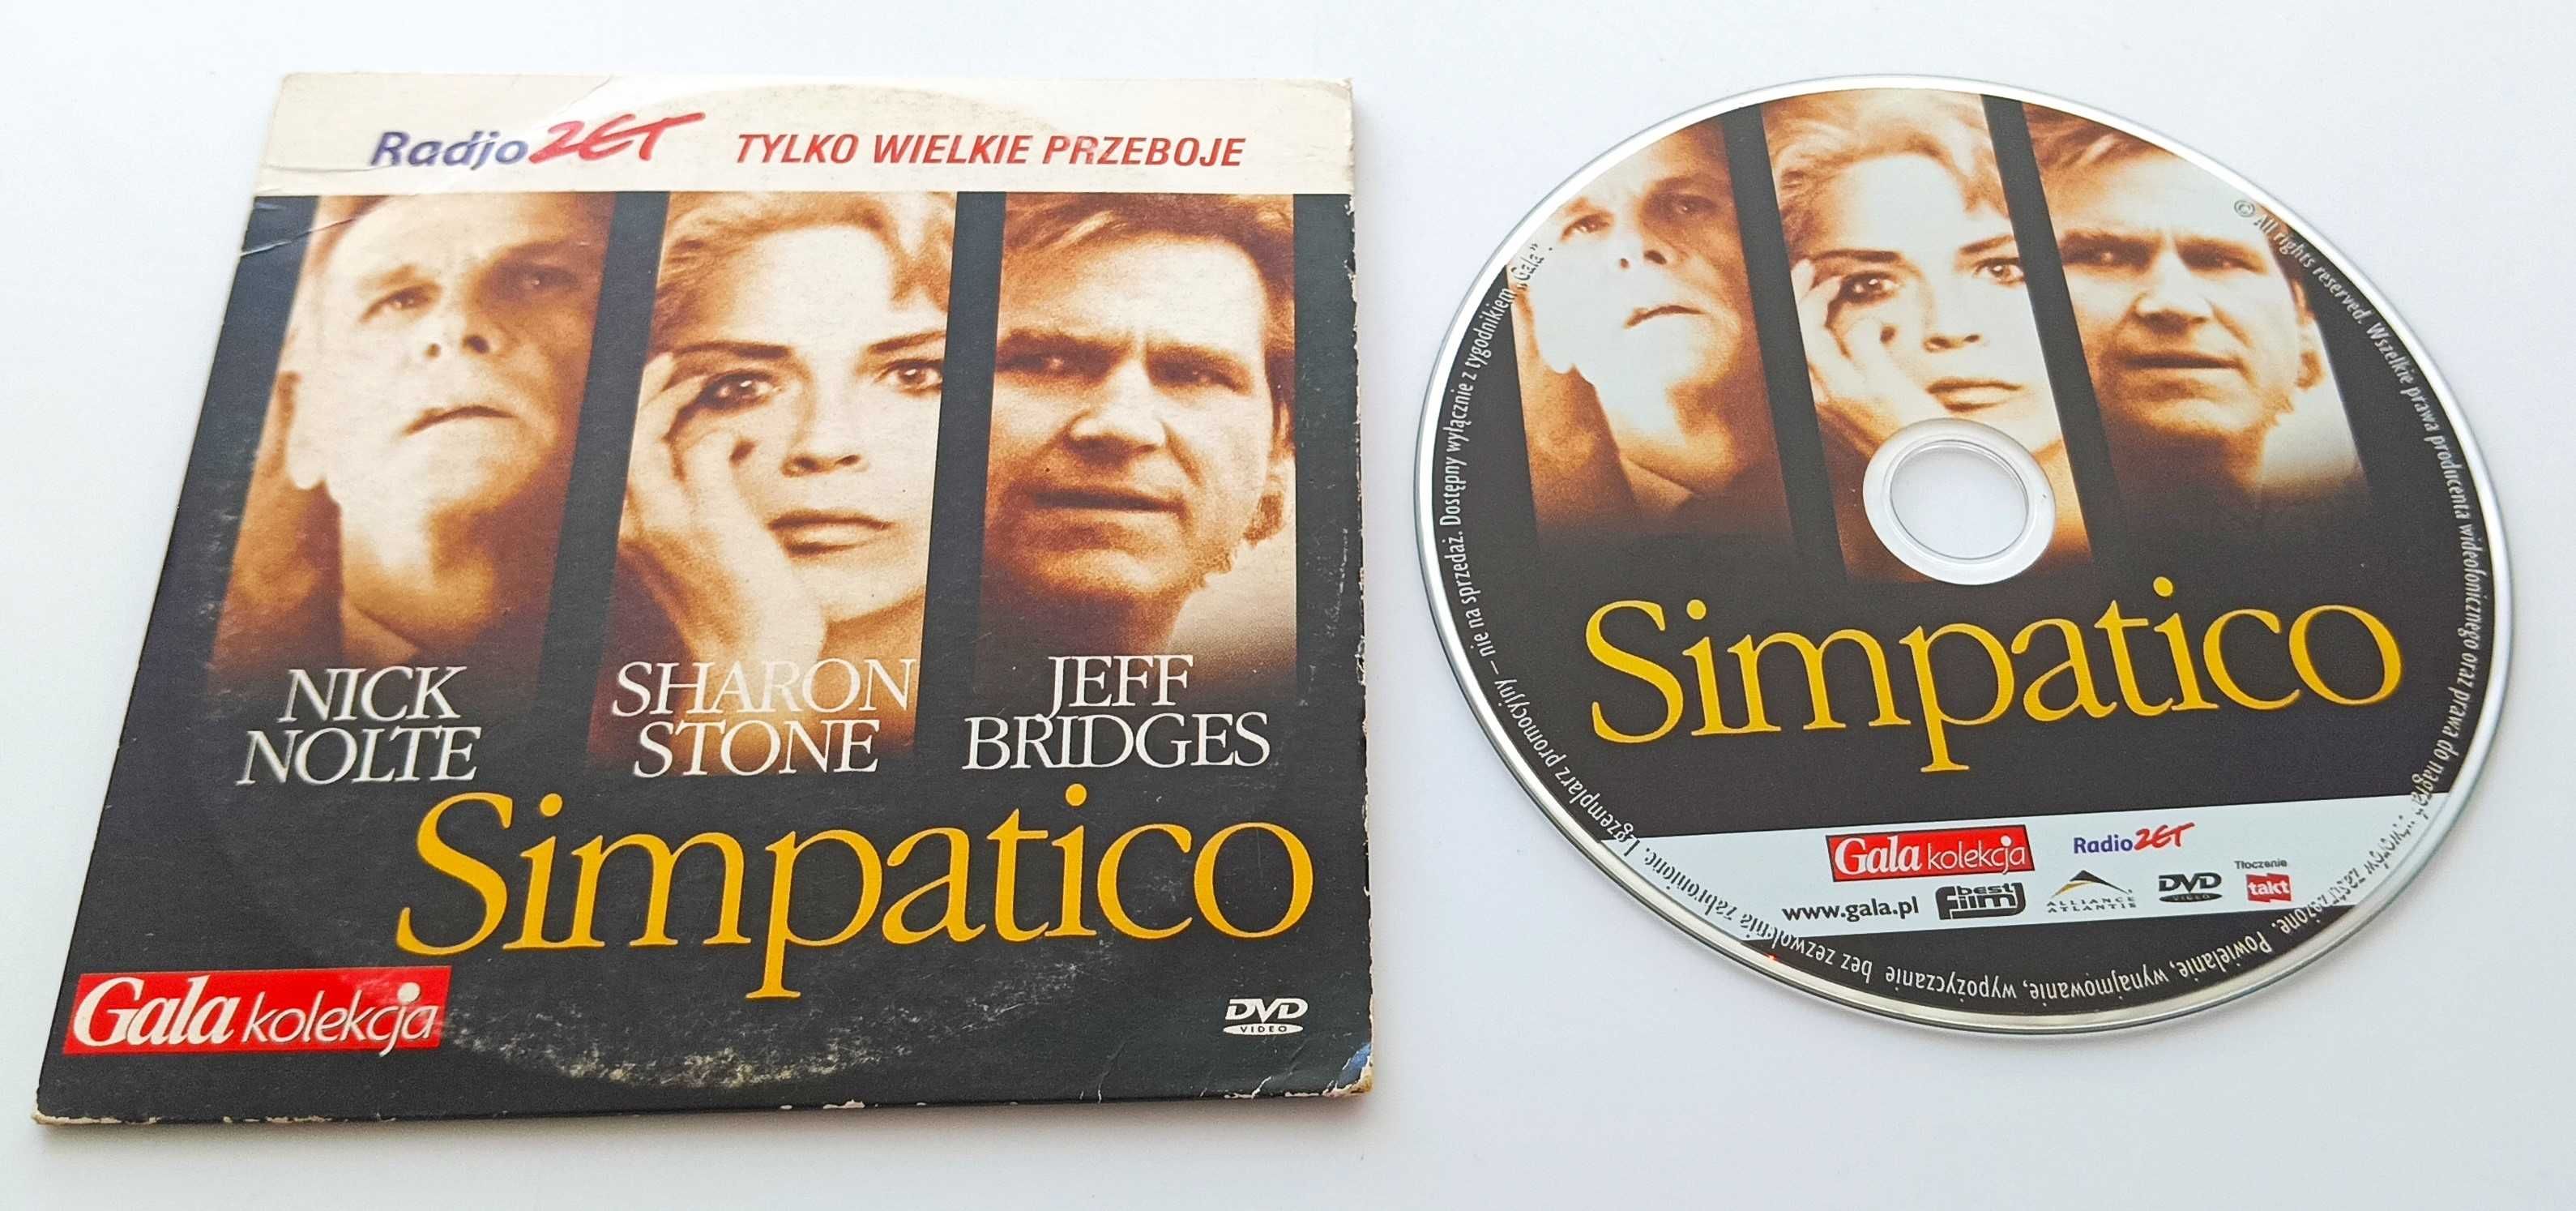 Simpatico Nolte Stone Bridges płyta DVD